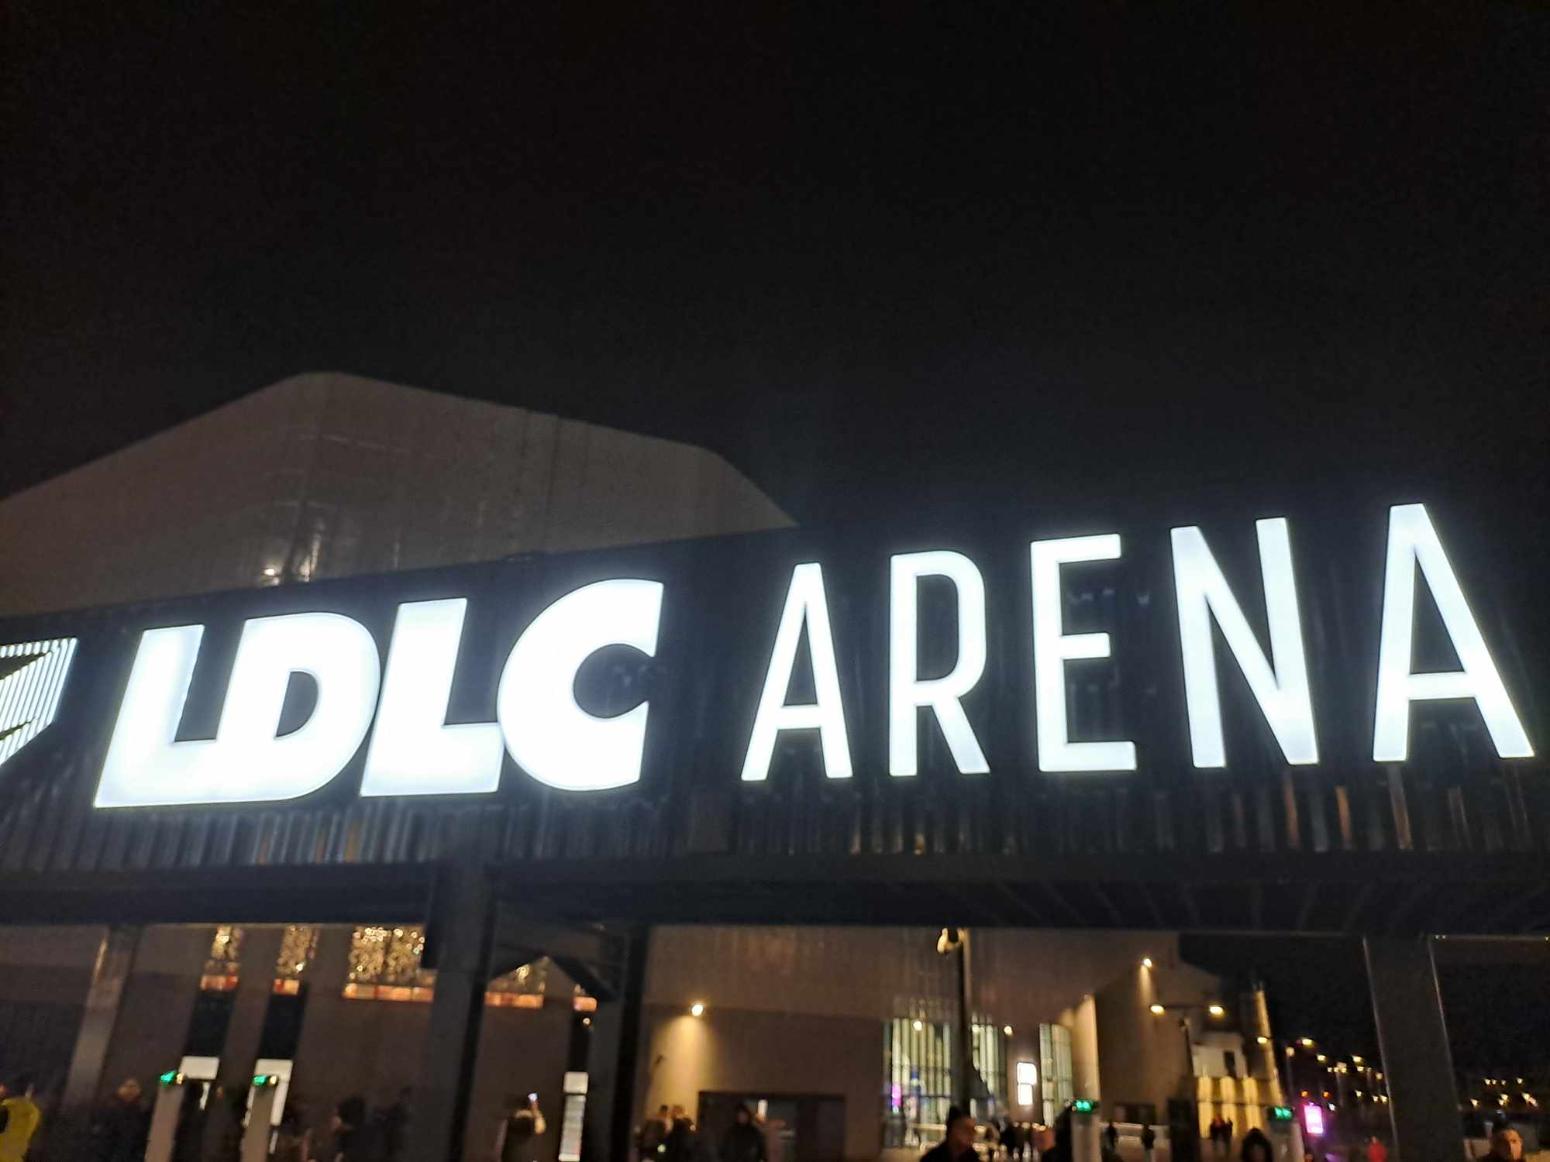 LDLC Arena: Το νεόκτιστο γήπεδο της Βιλερμπάν